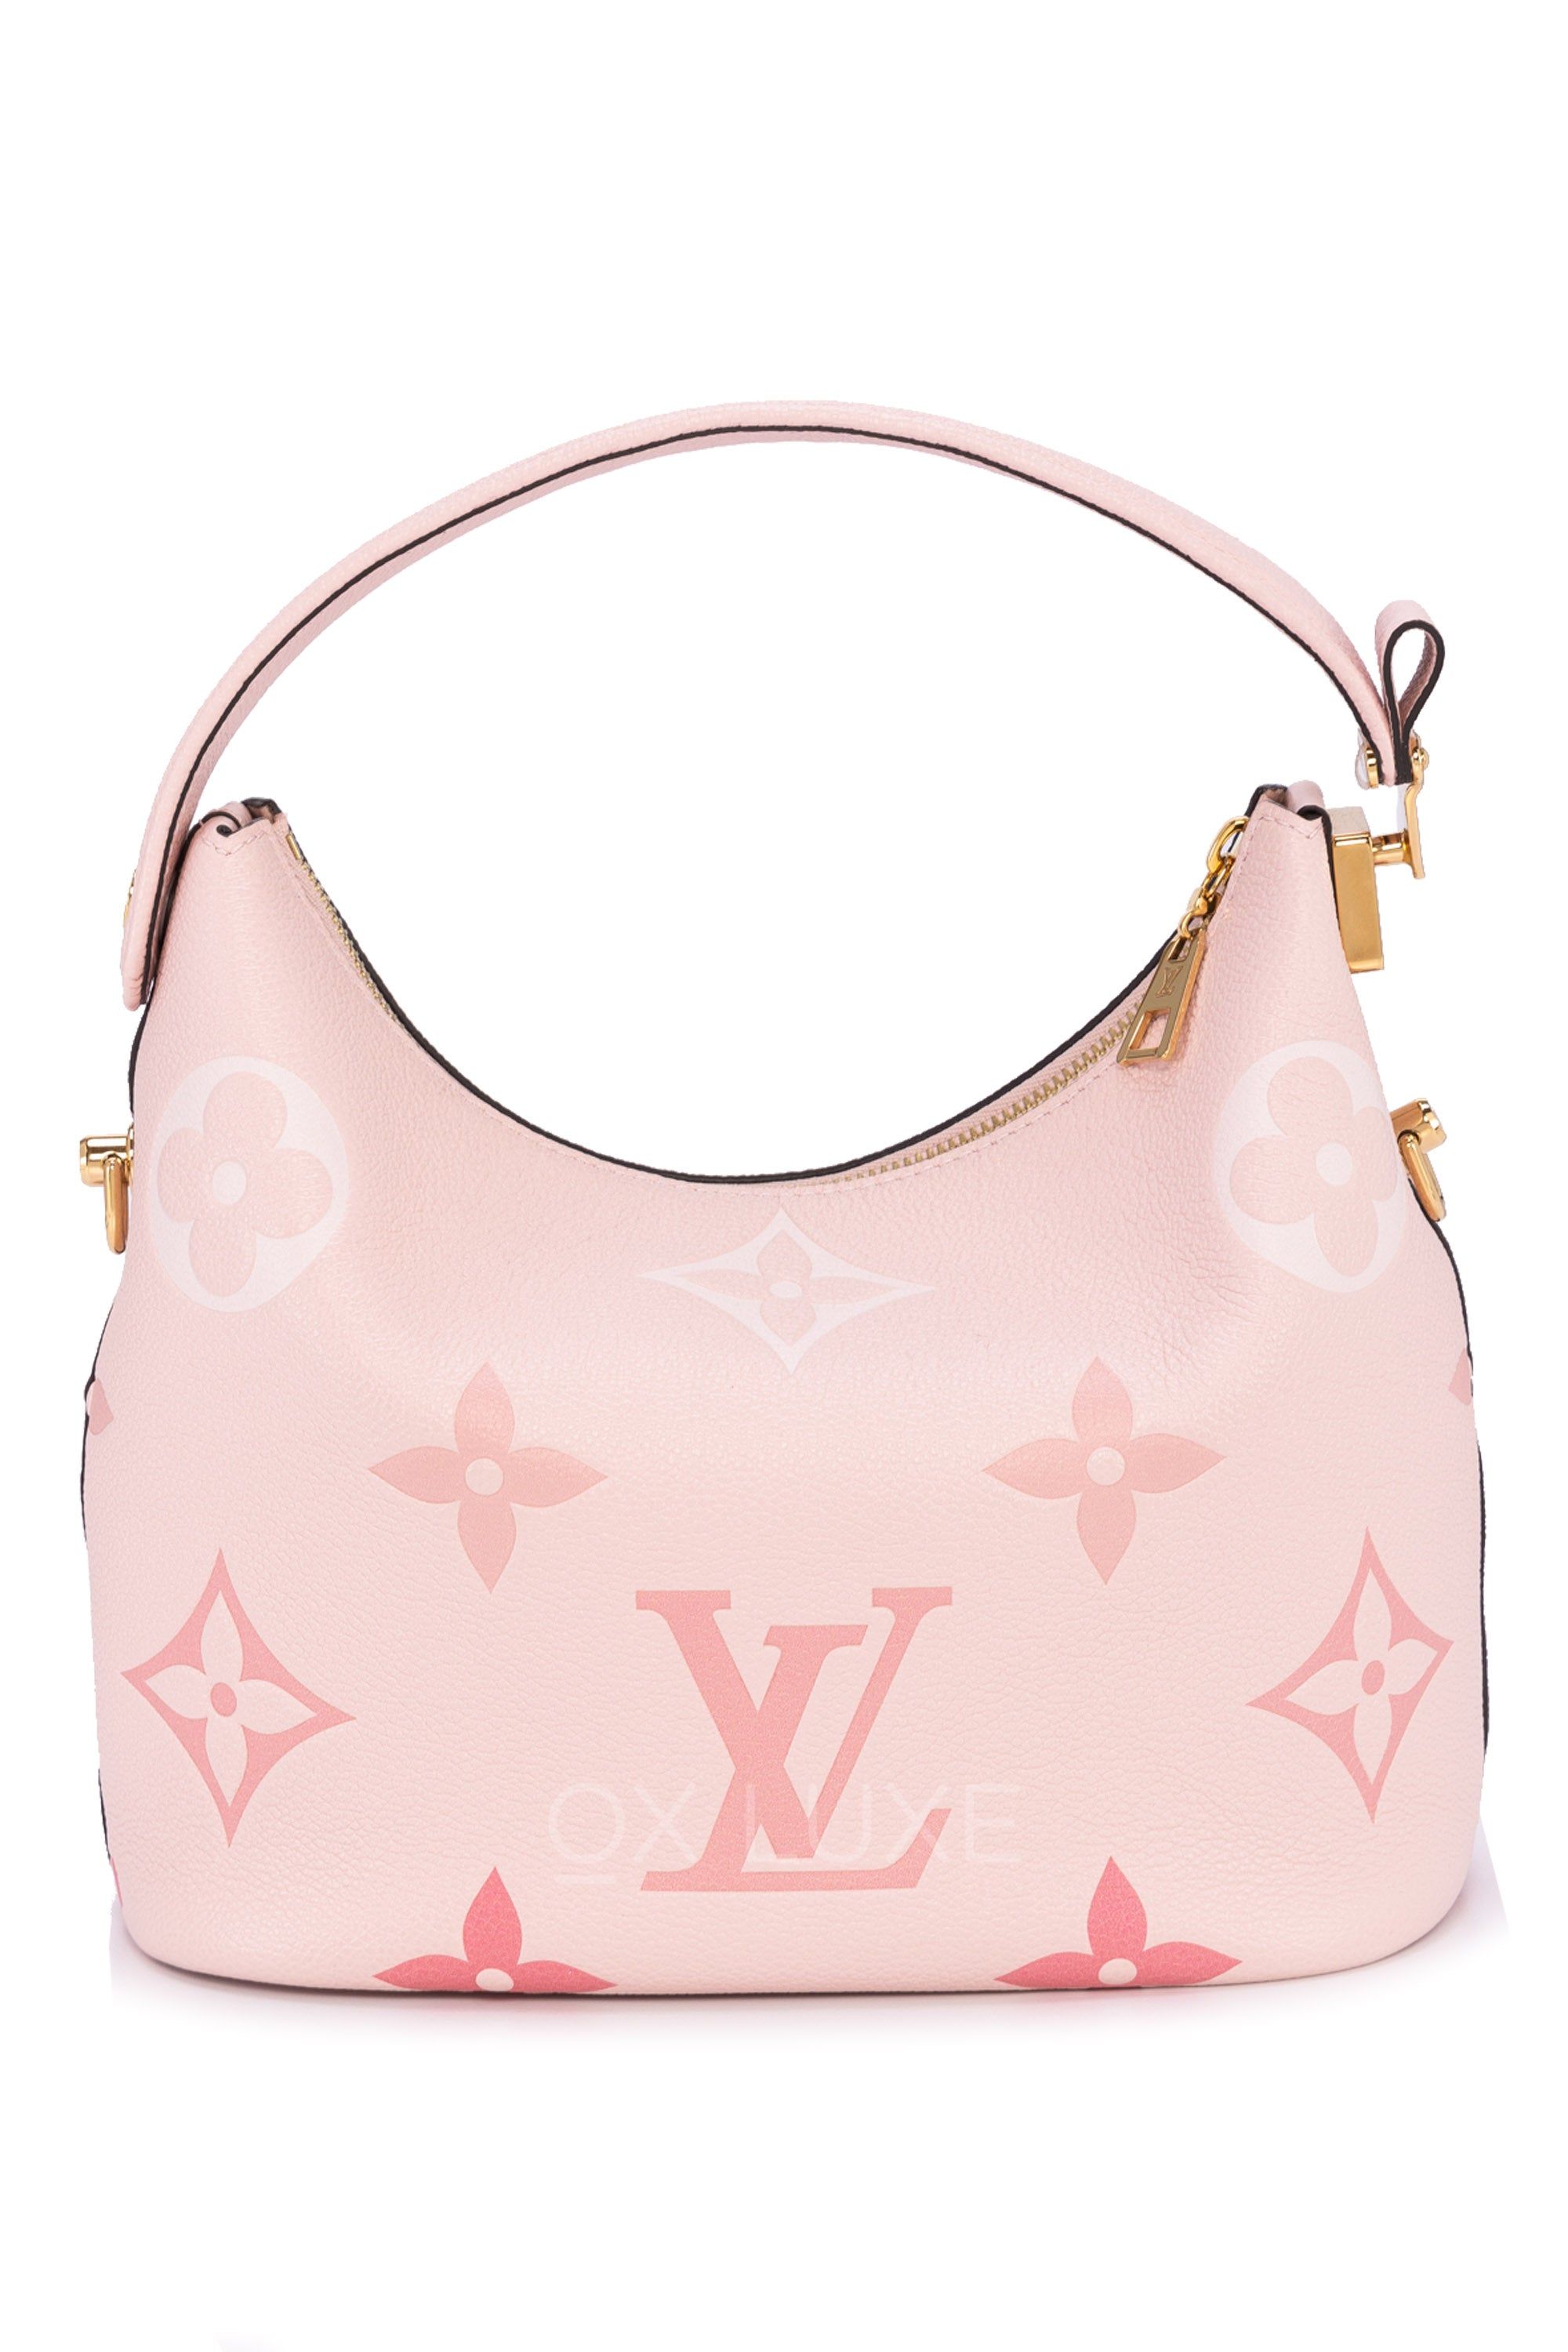 Louis Vuitton Marshmallow M45697 Bouton de Rose  Pretty bags, Luxury  purses, Louis vuitton handbags